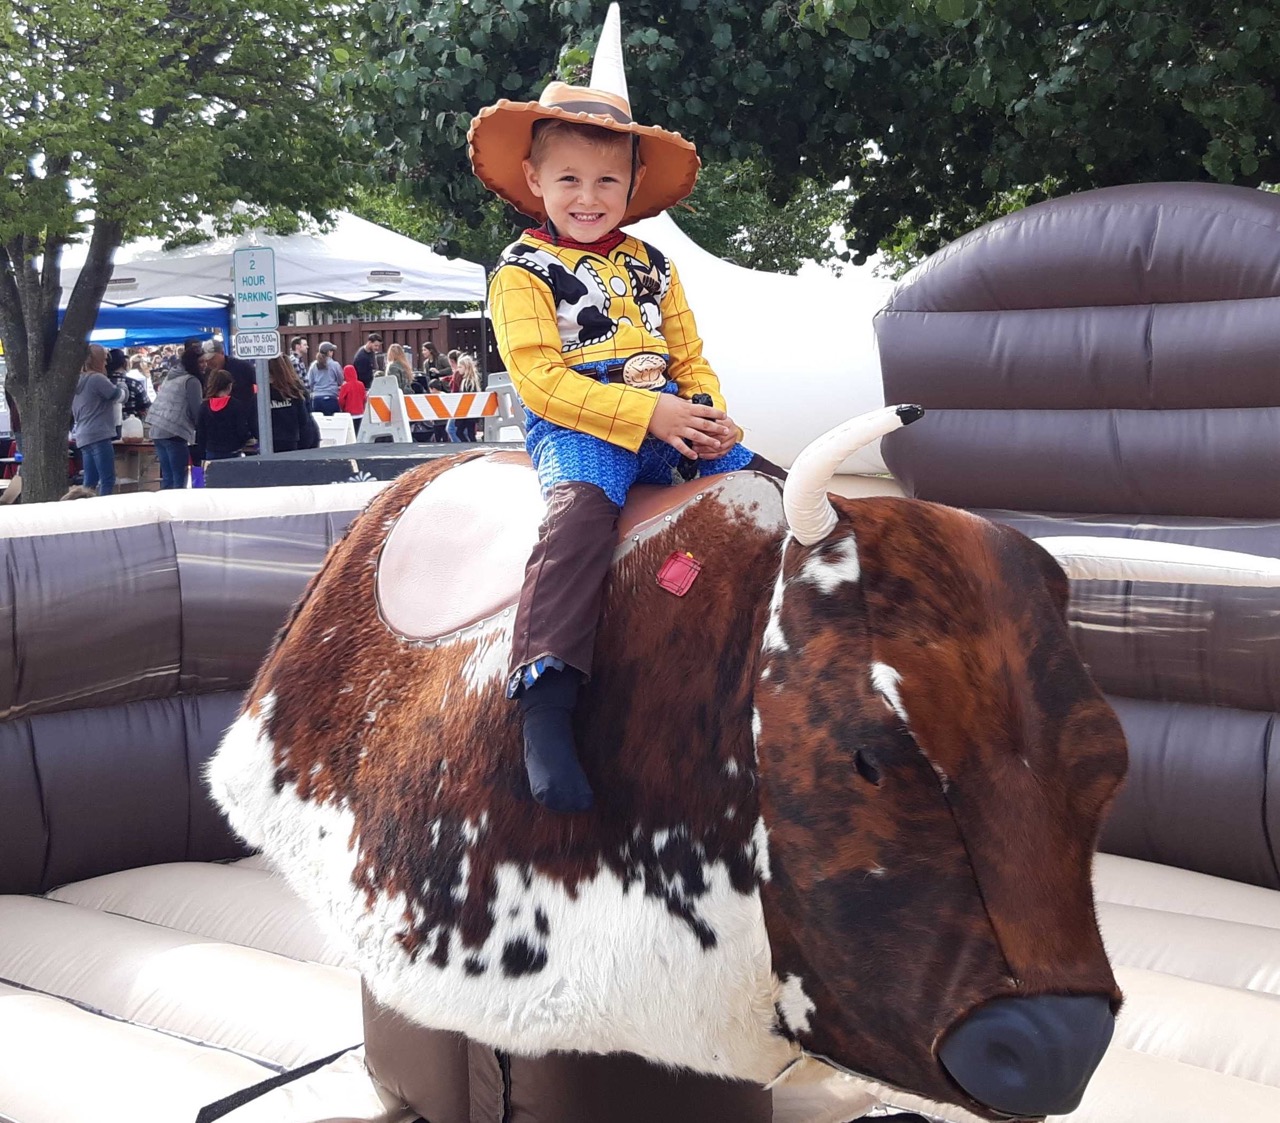 Cowboy kiddo riding mechanical bull